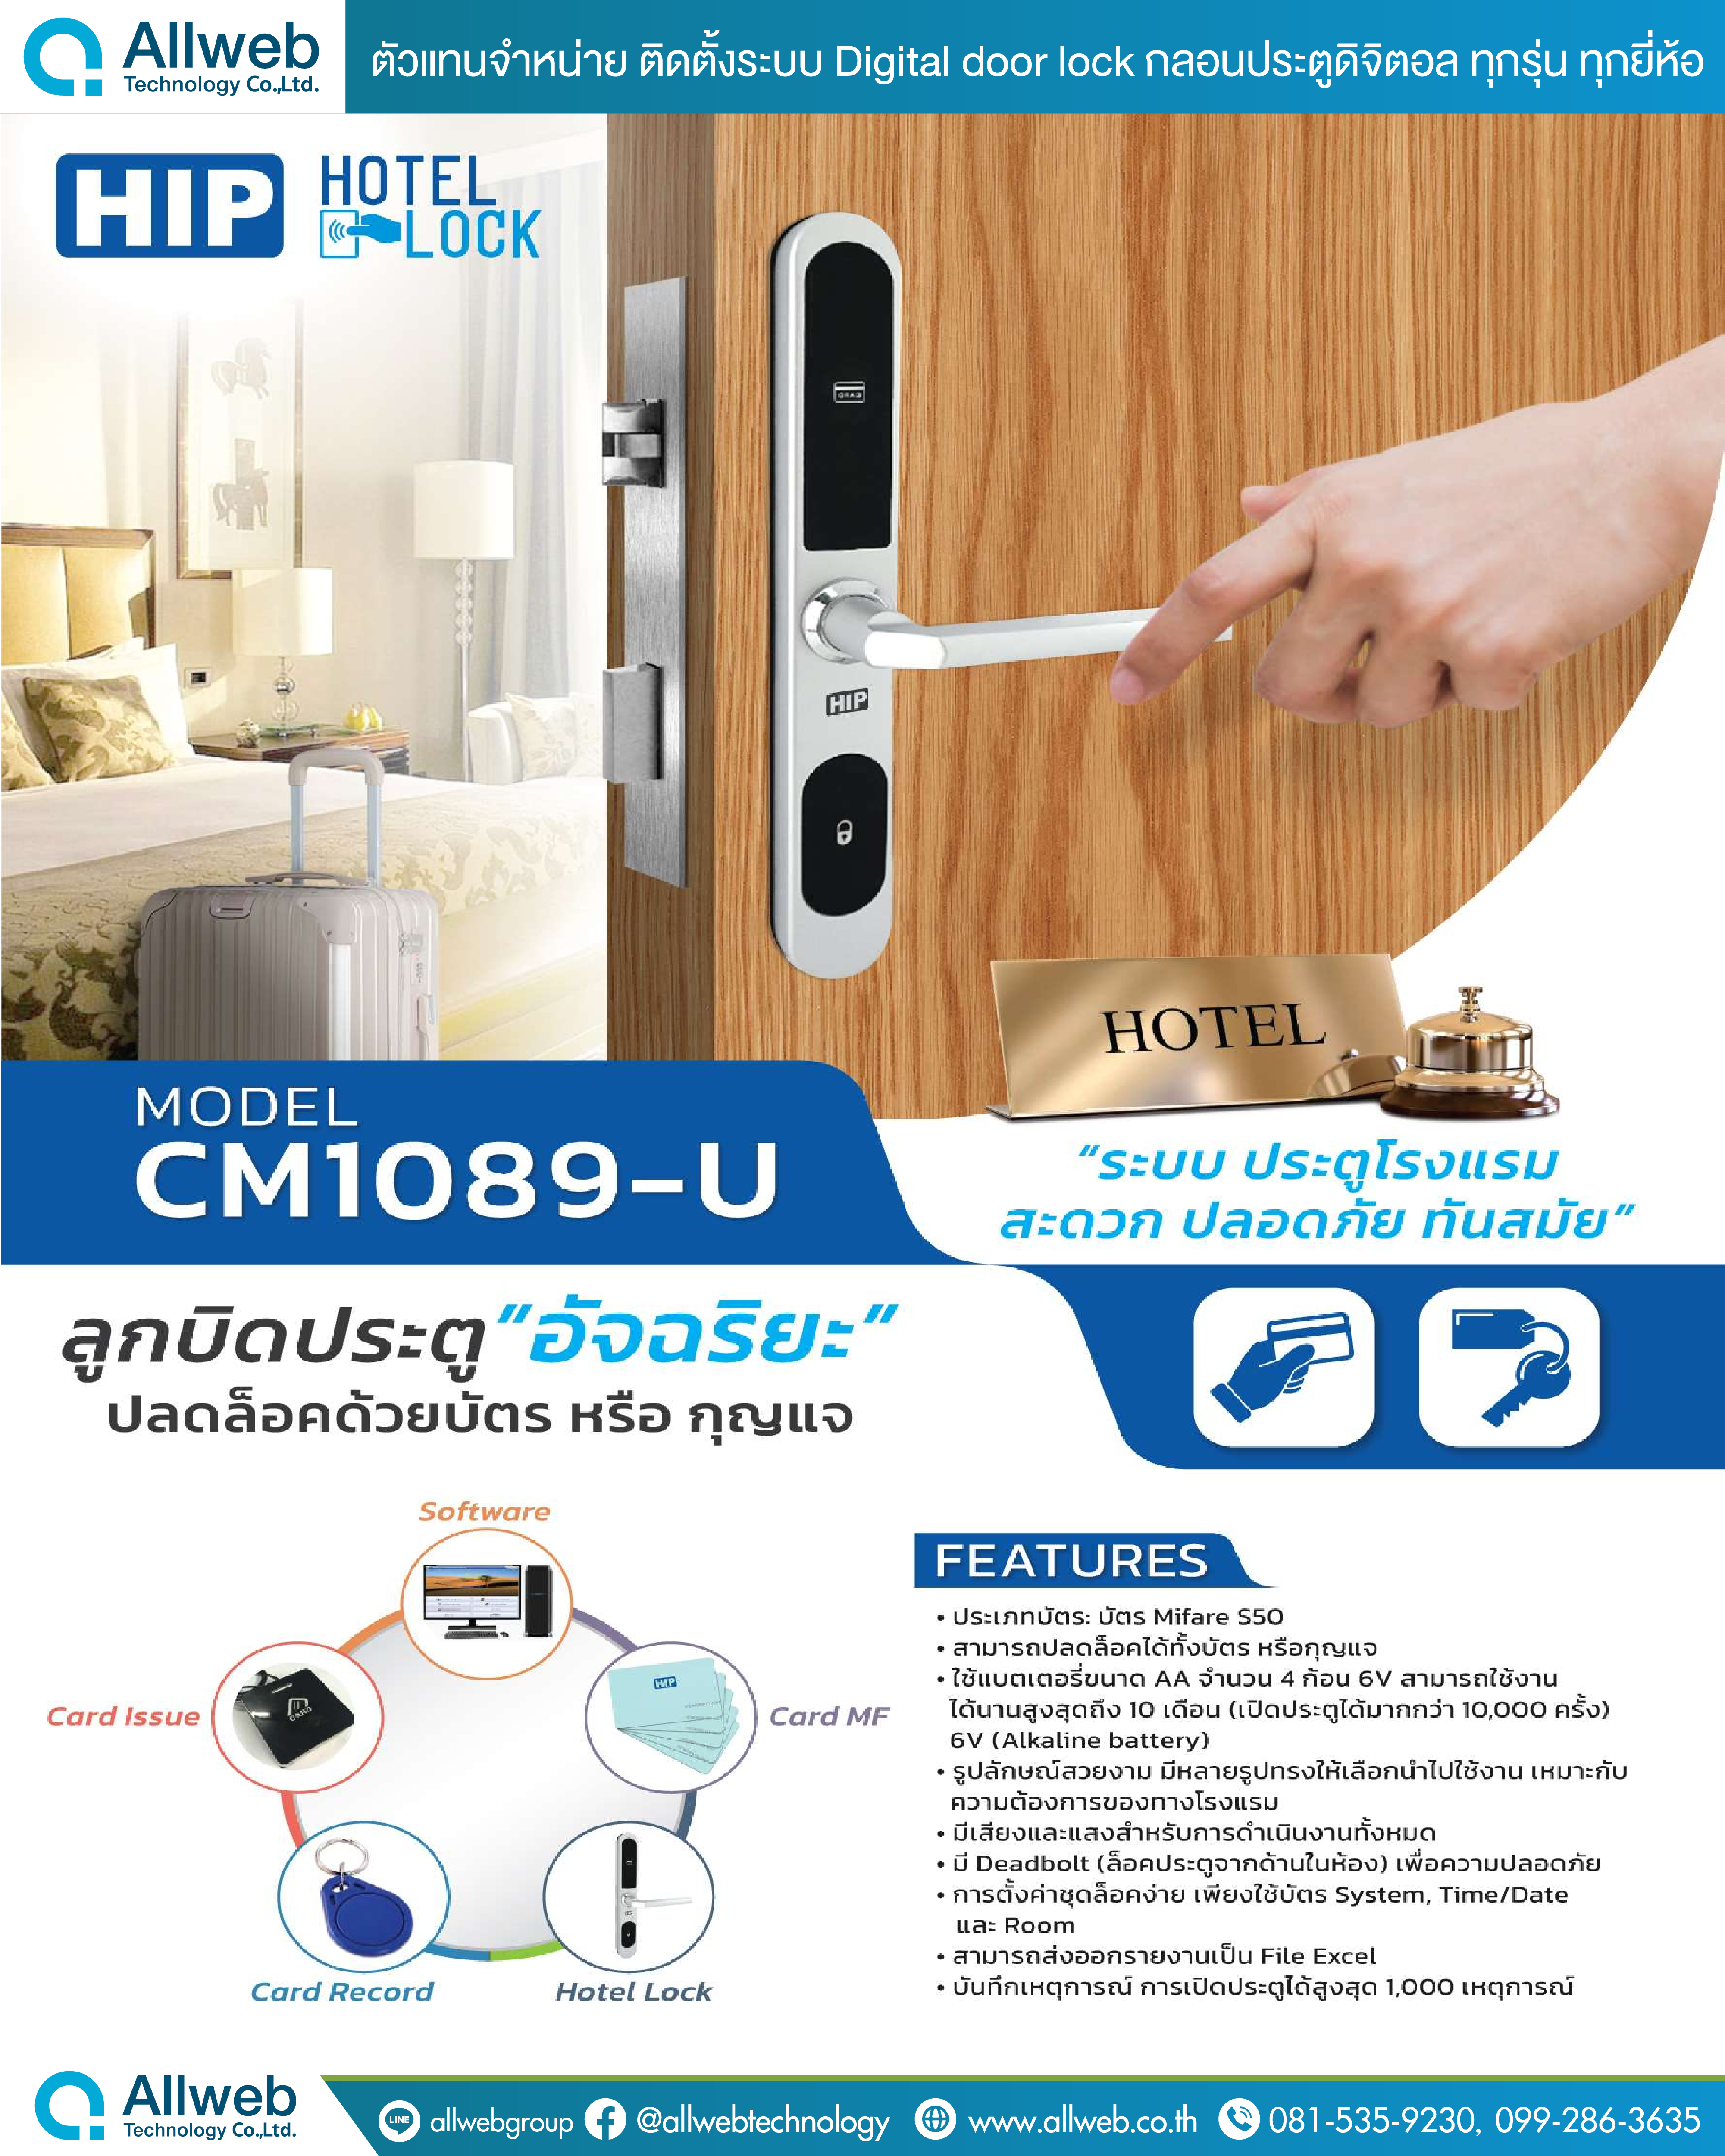 HIP Hotel Lock รุ่น CM1089-U